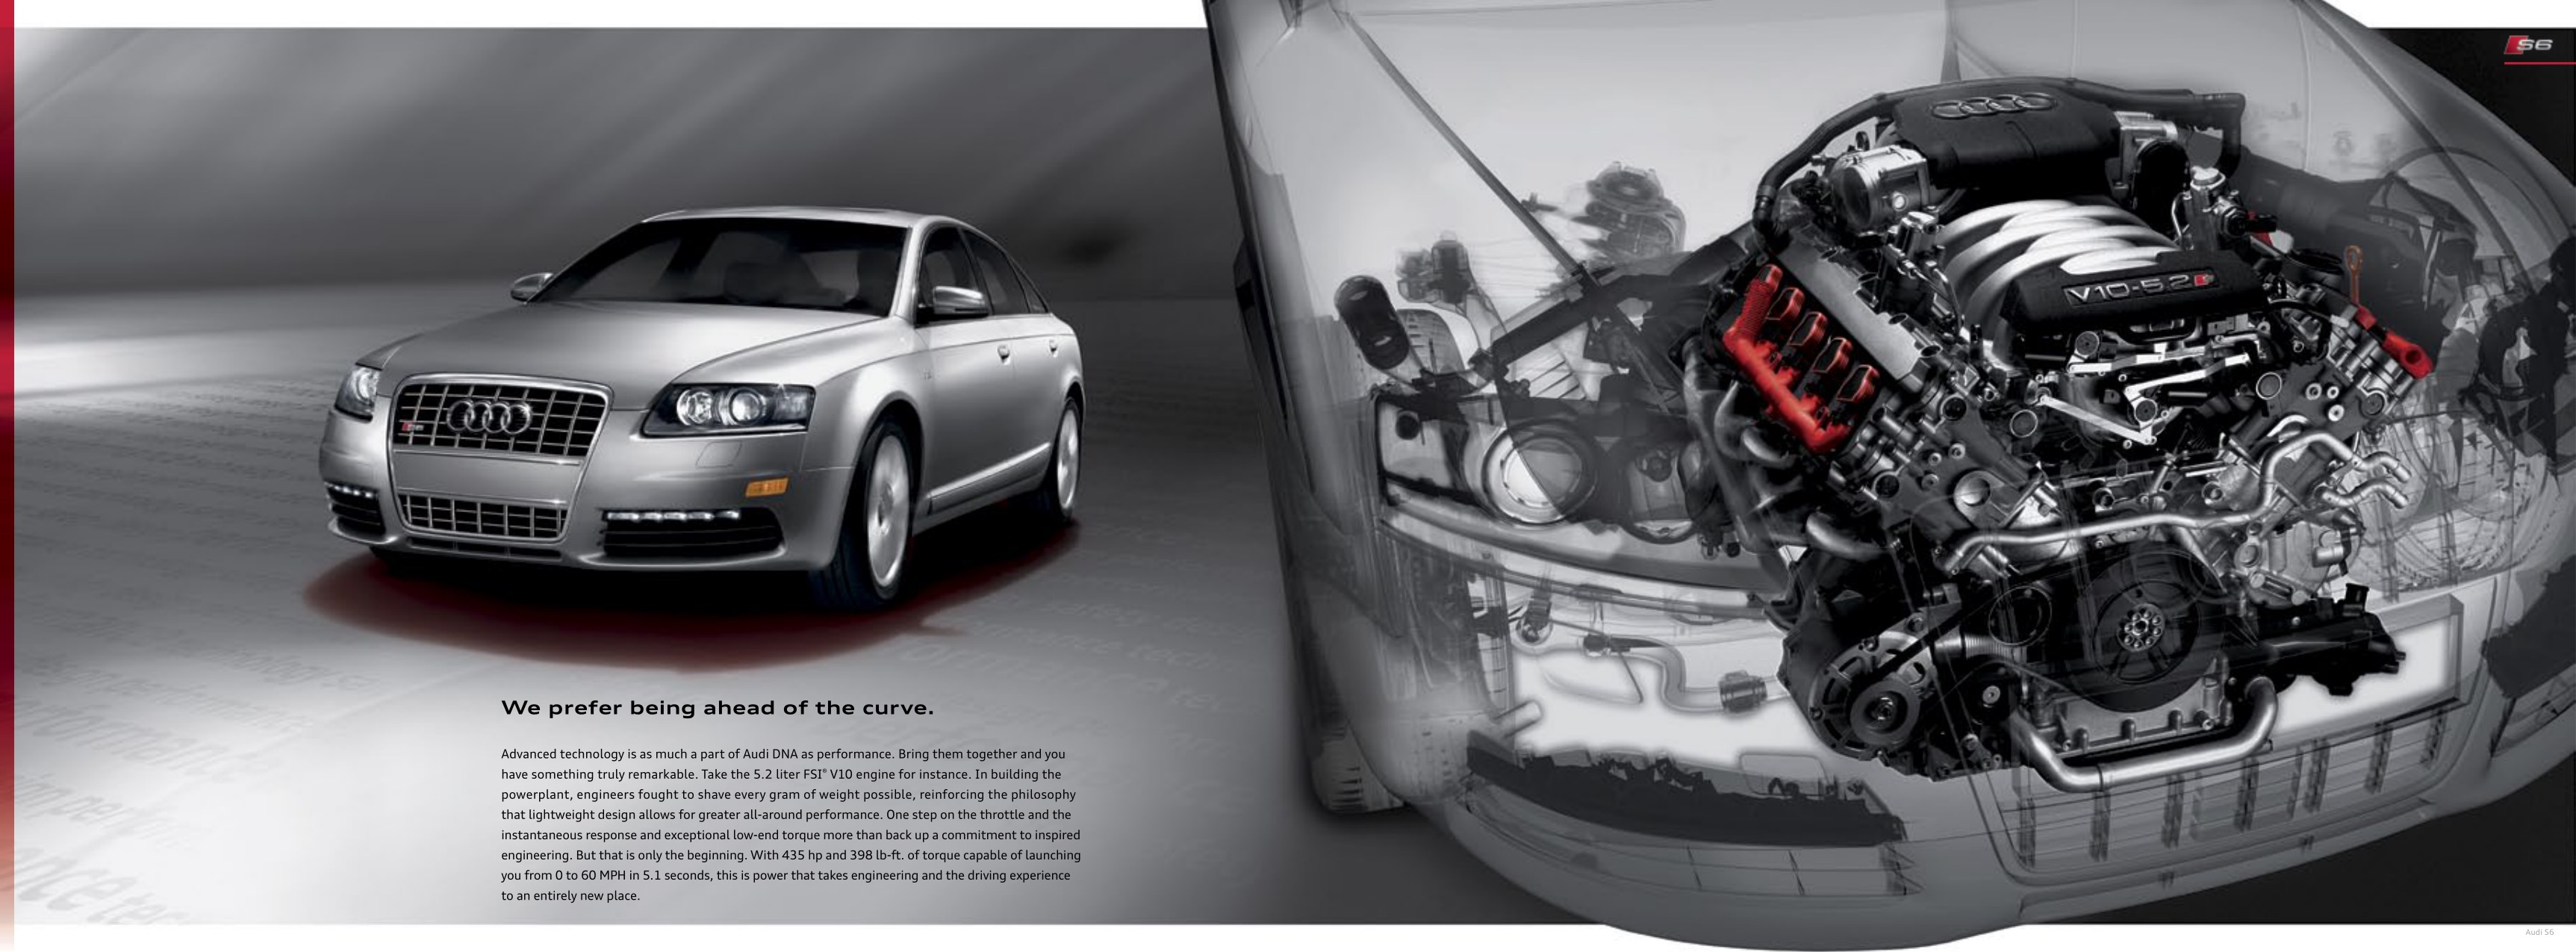 2010 Audi A6 Brochure Page 9